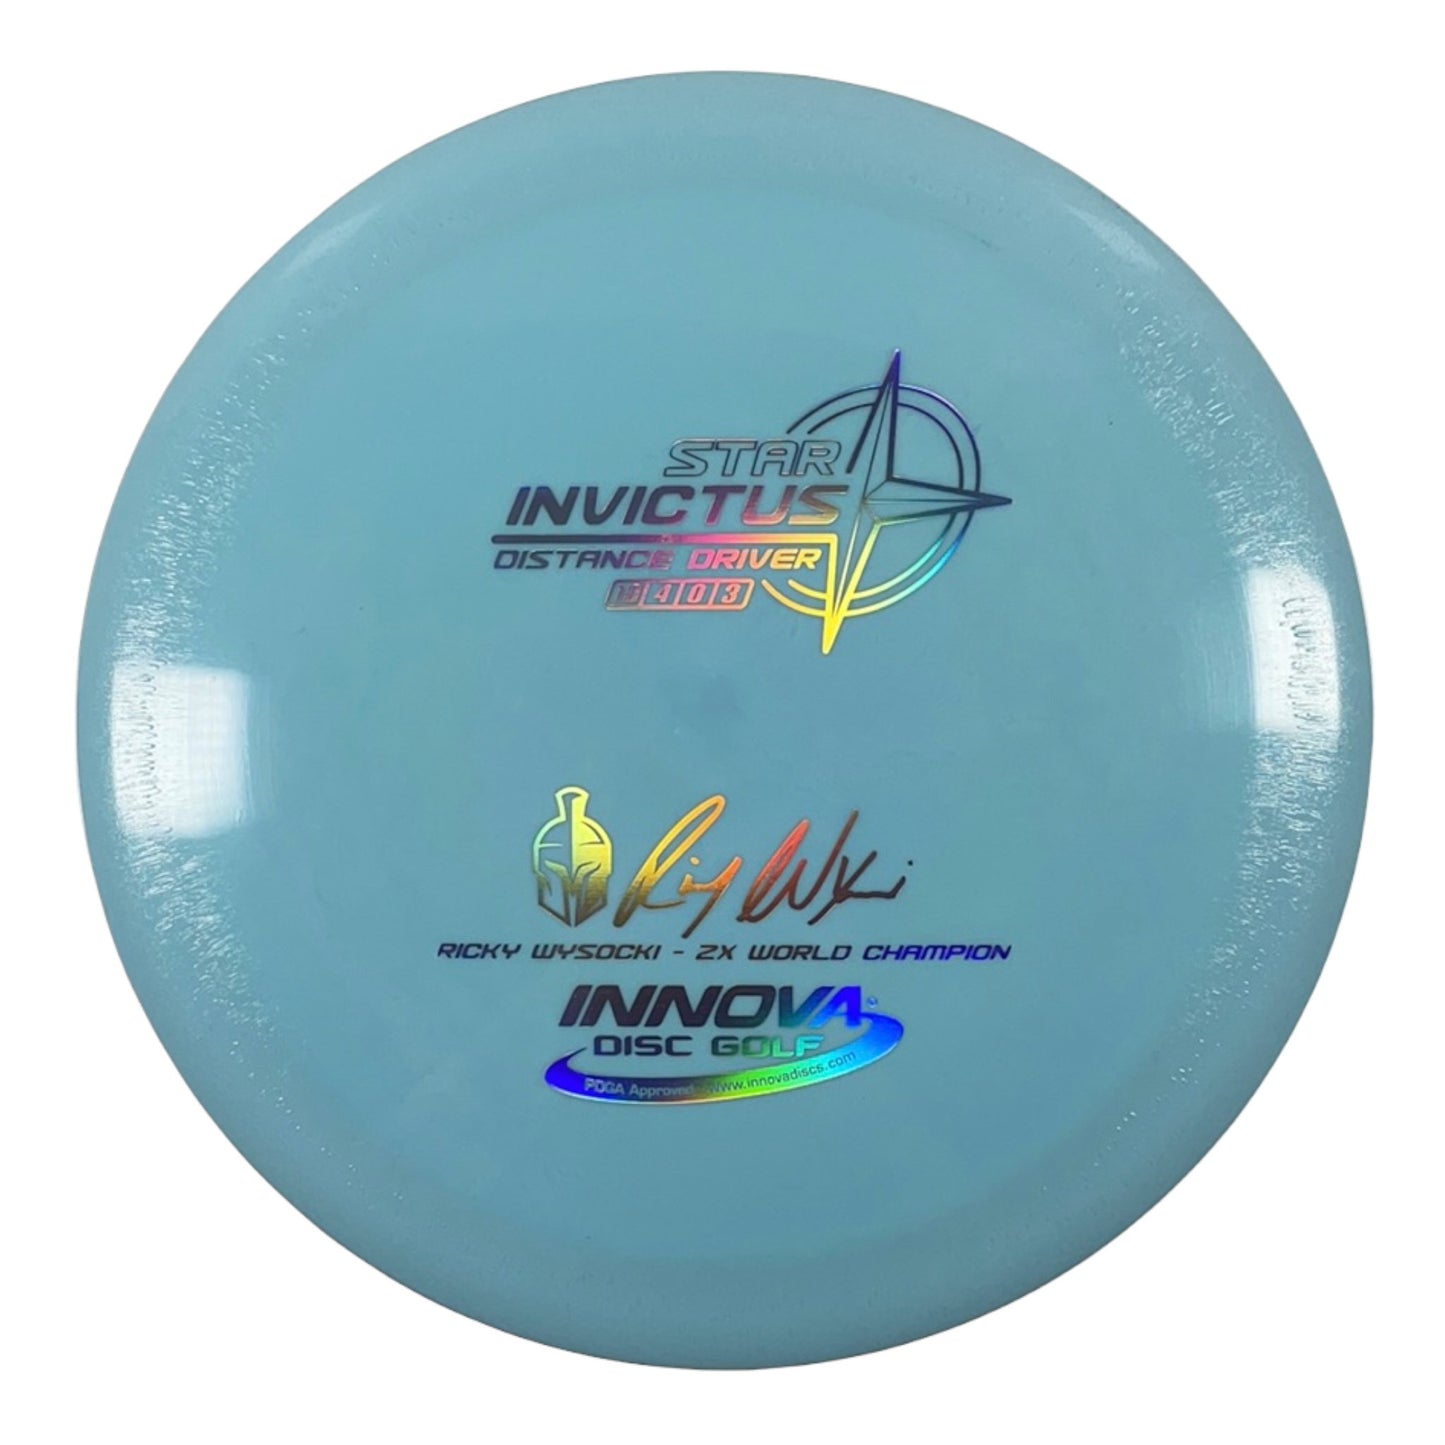 Innova Champion Discs Invictus | Star | Blue/Silver 167g-169g (Ricky Wysocki) Disc Golf